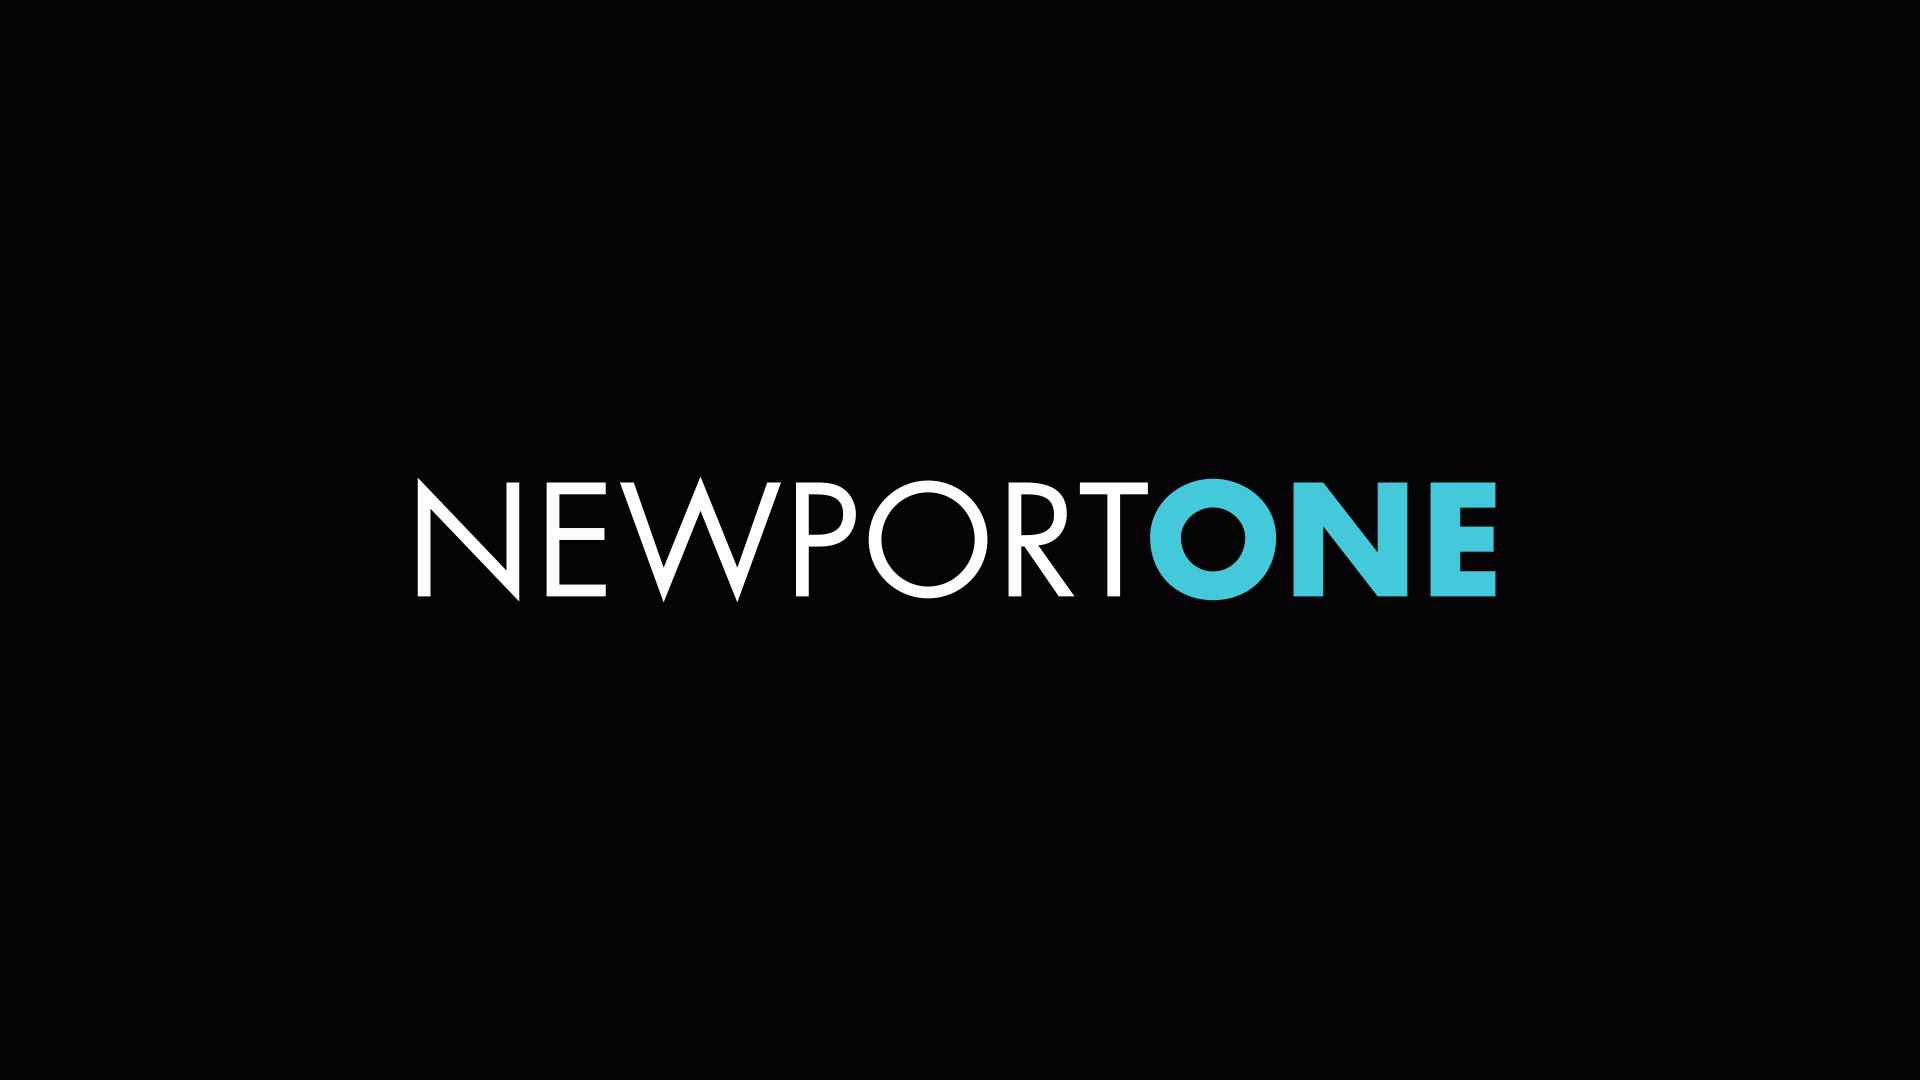 newport one logo on black